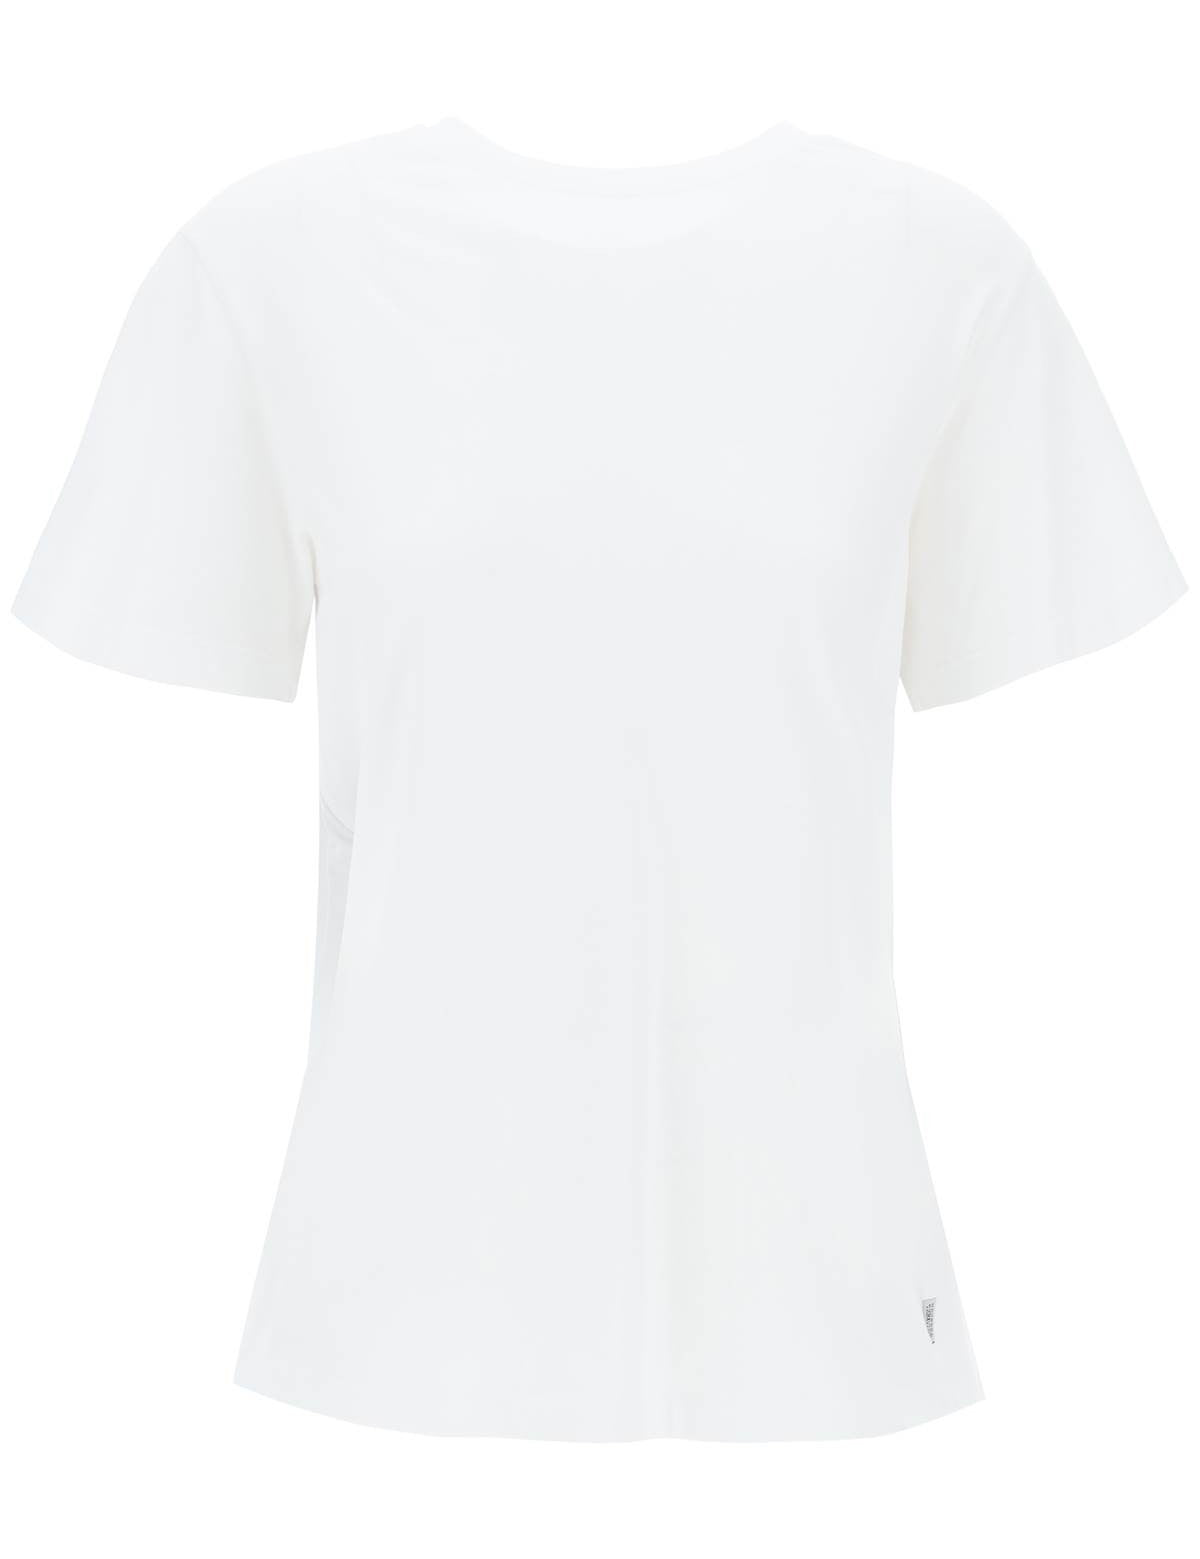 mm6-maison-margiela-hybrid-t-shirt.jpg